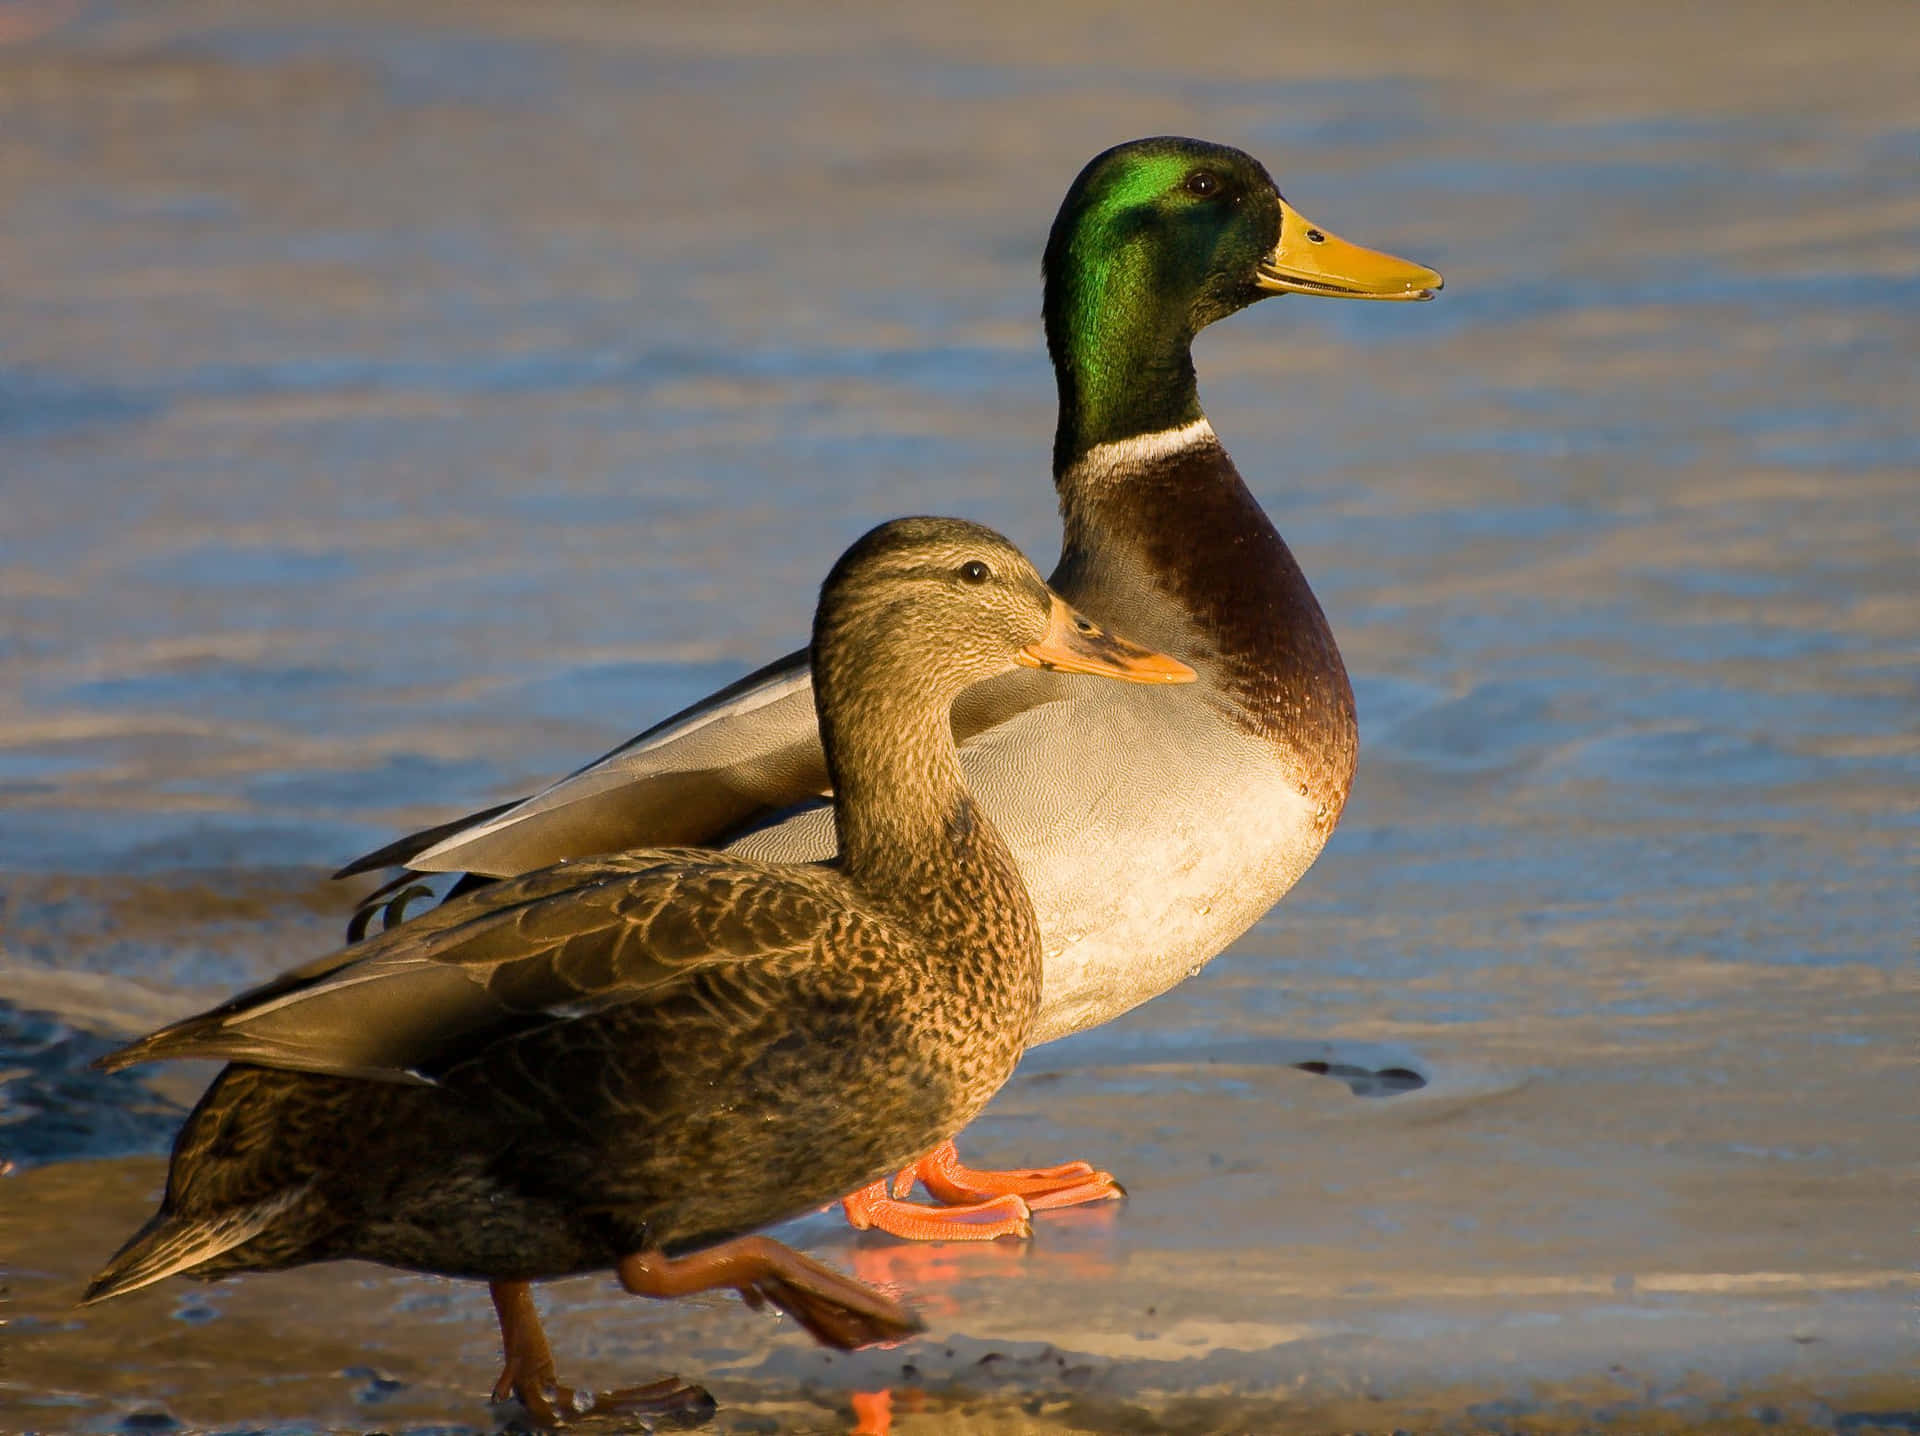 Mallard Duck by the lake